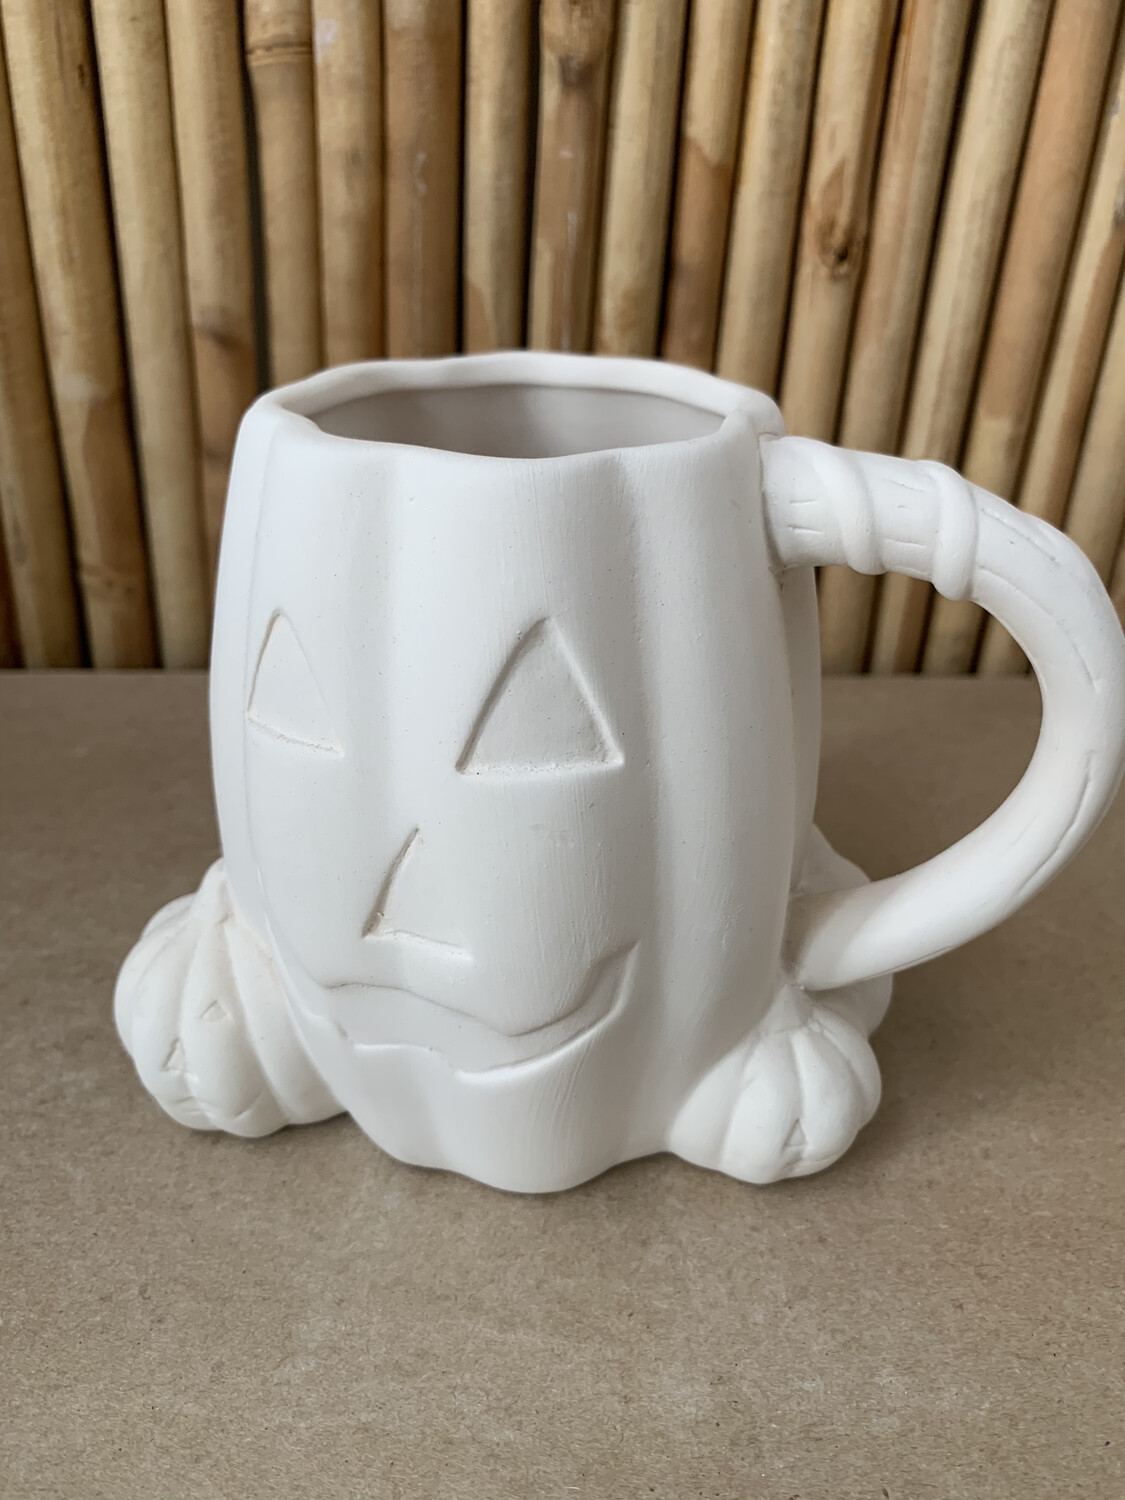 Paint Your Own Pottery - Ceramic
Pumpkin Mug Painting Kit